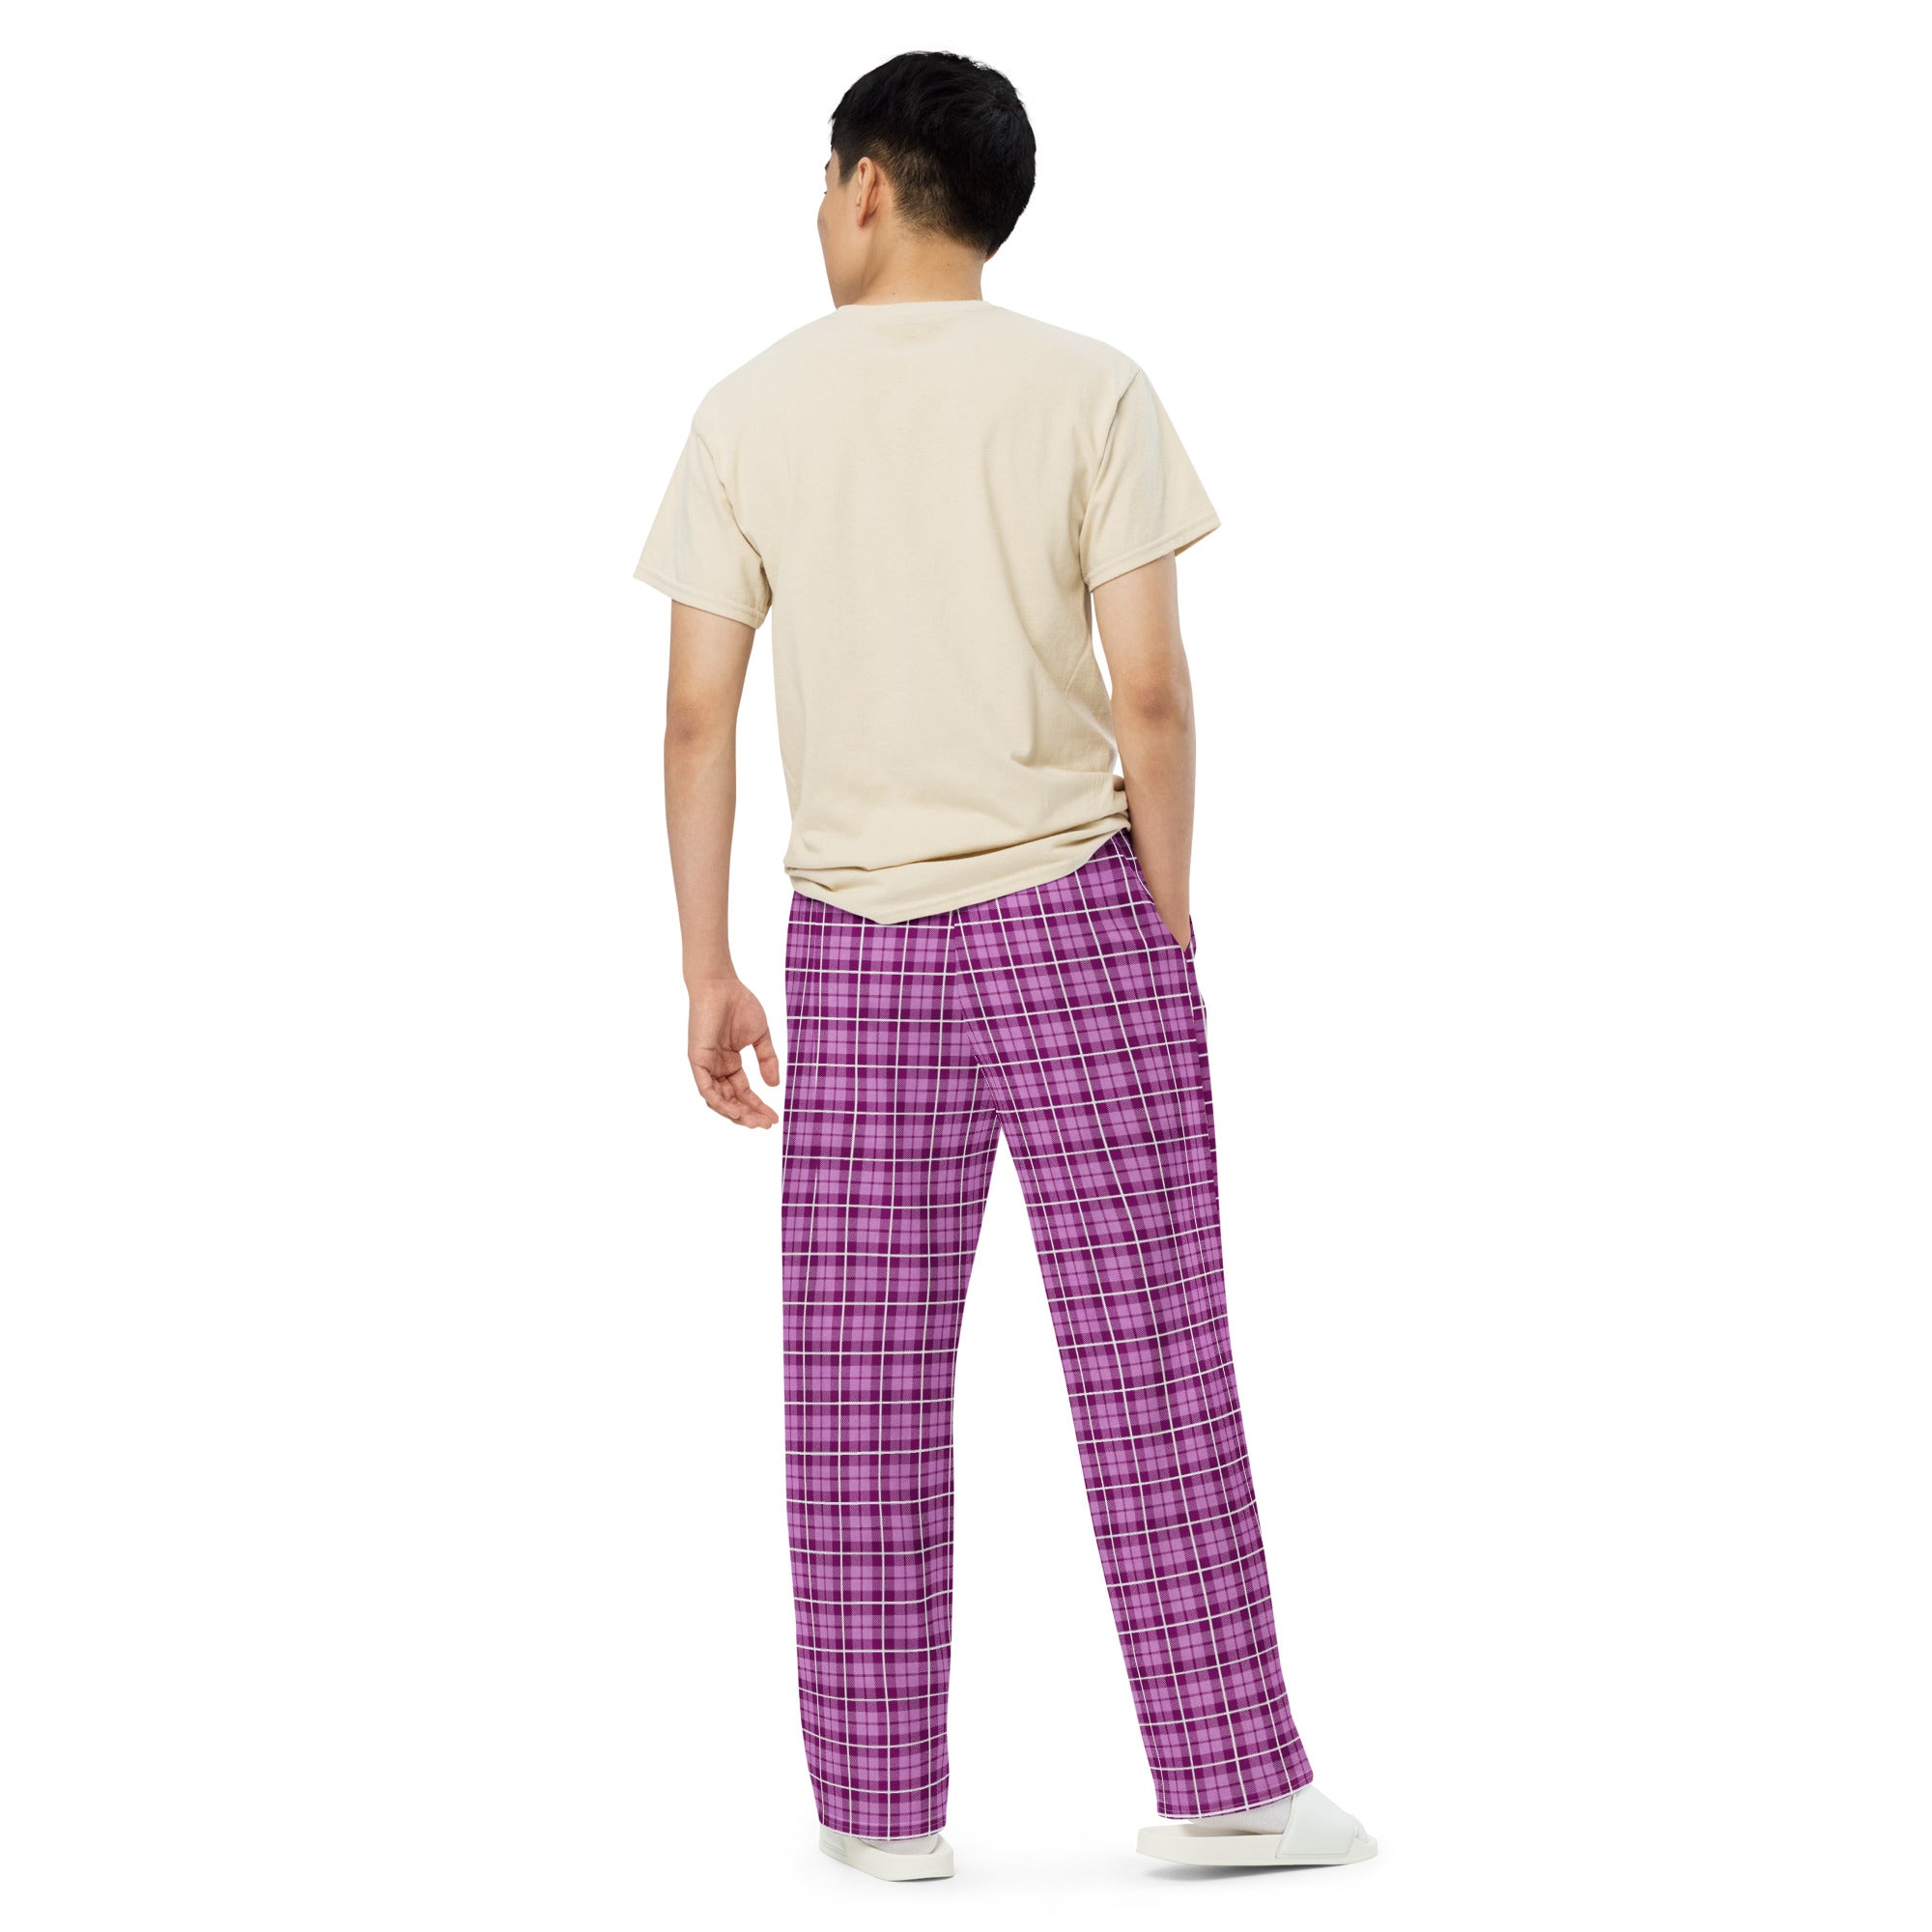 unisex wide-leg pants- Tartan Dark Pink